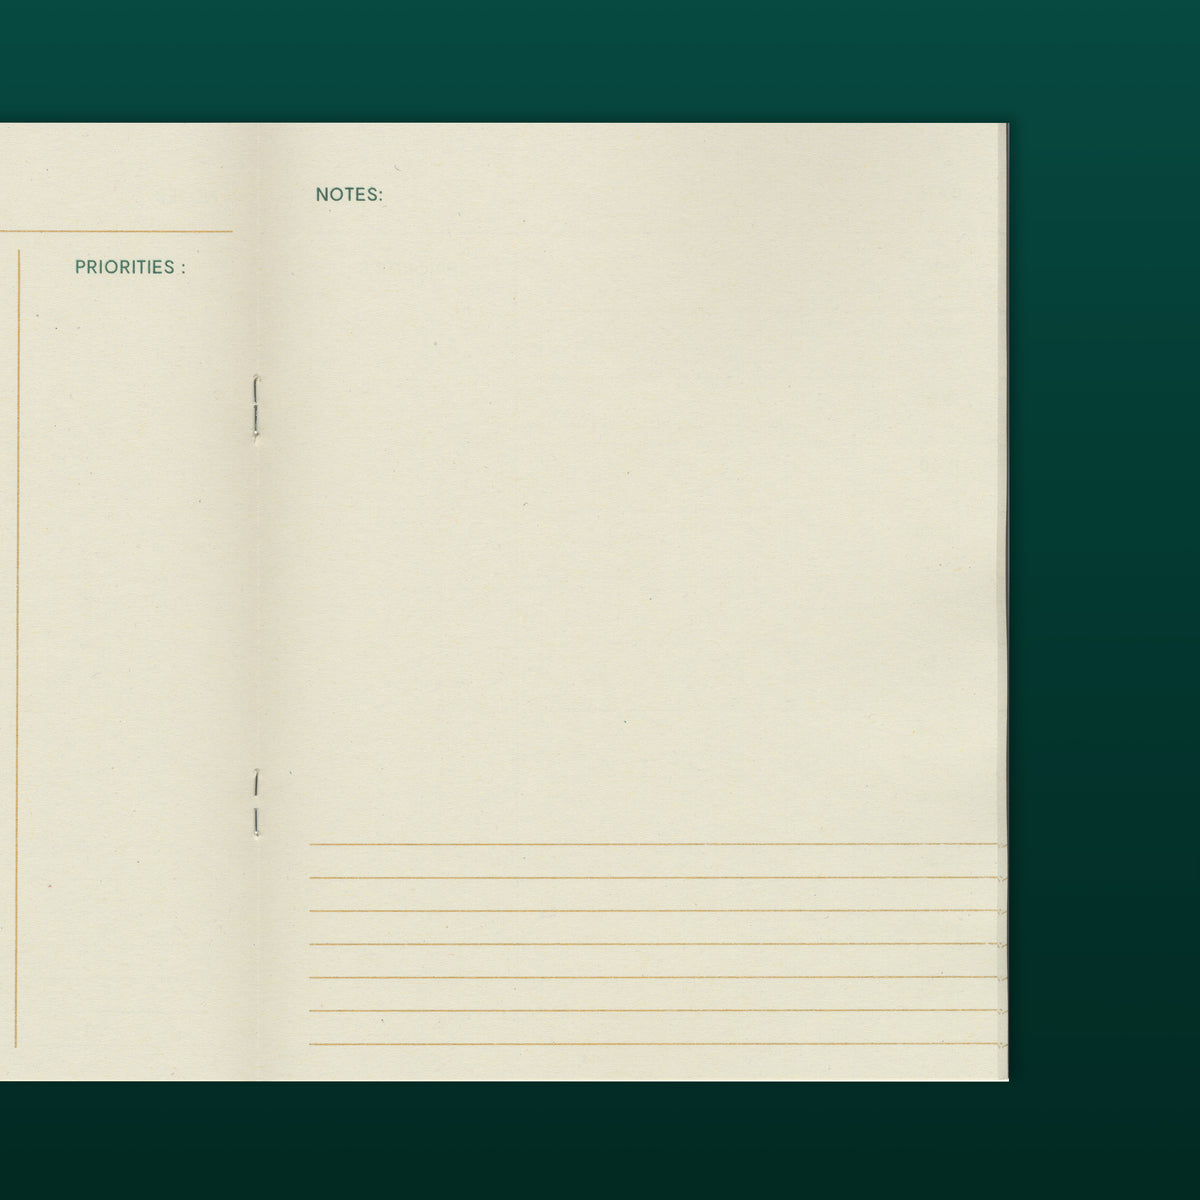 Quaderno No.9 - Day Planner Notebook